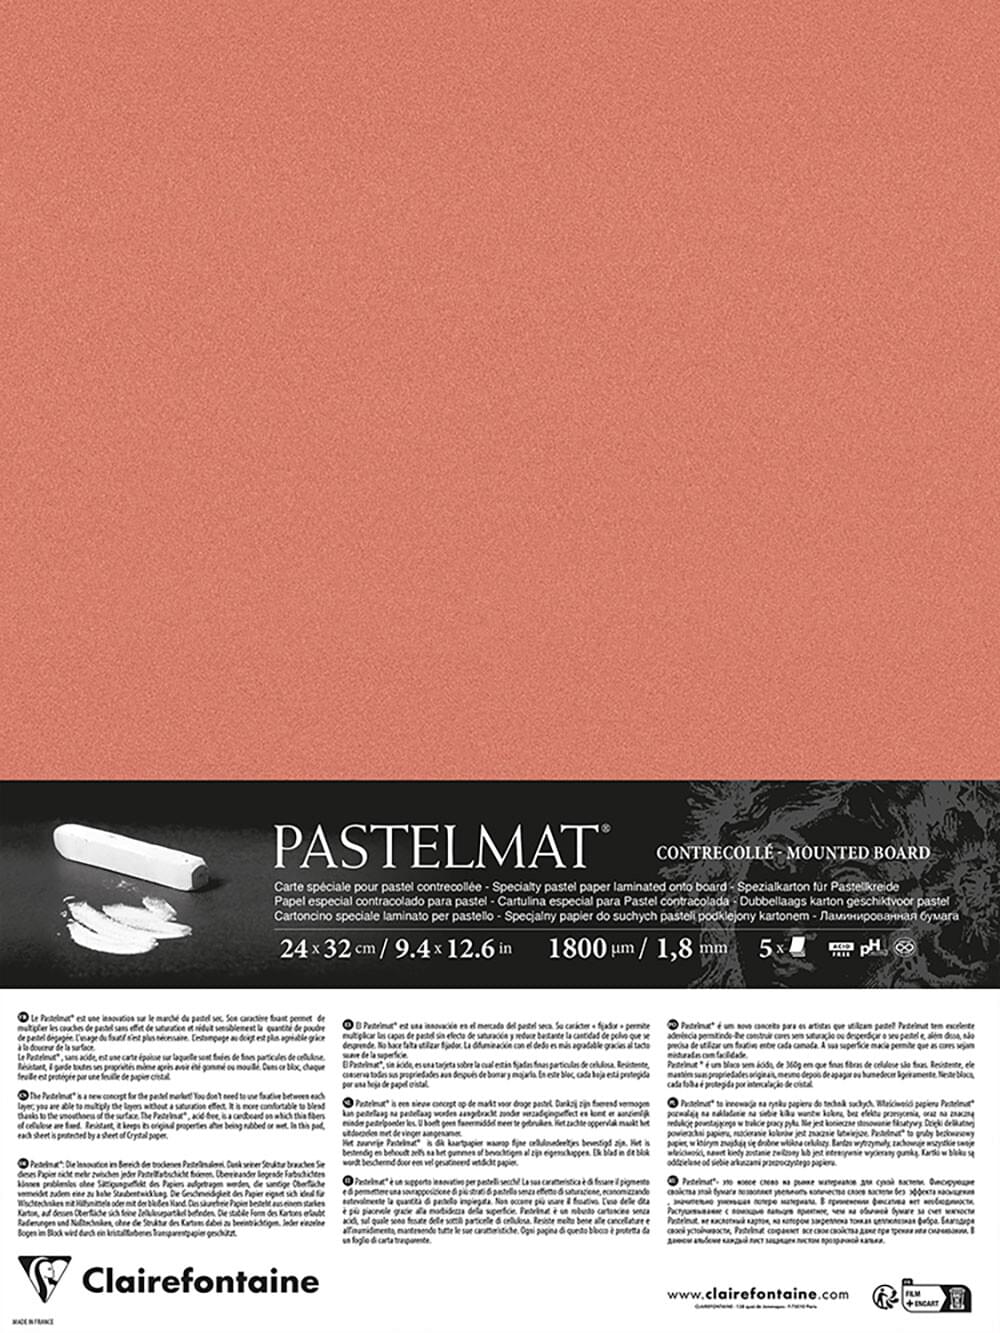 Pastelmat Board - S&S Wholesale